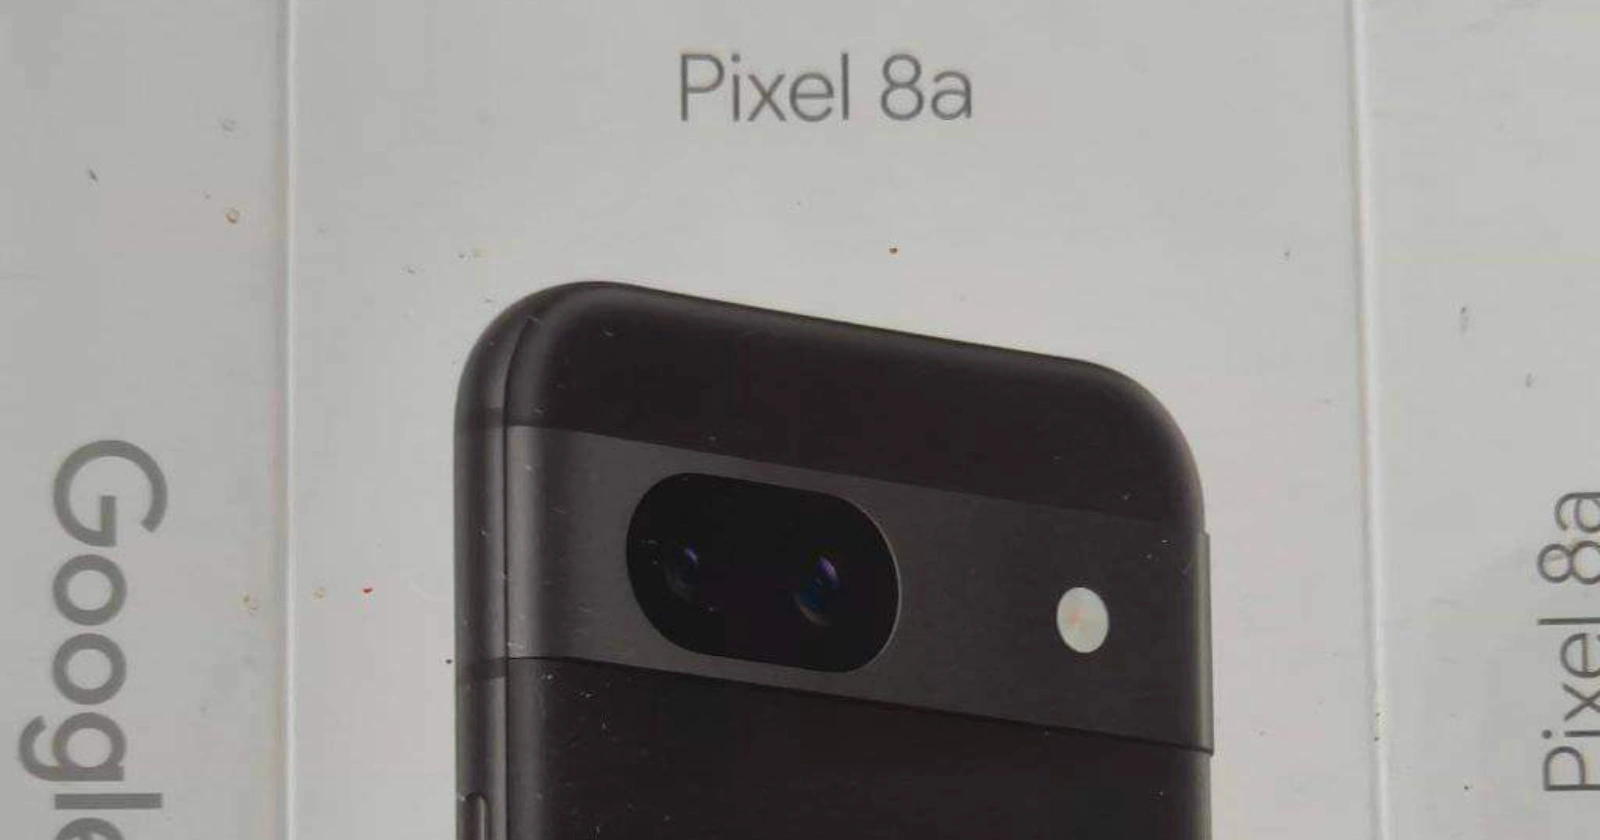 Google Pixel 8a retail box images surface